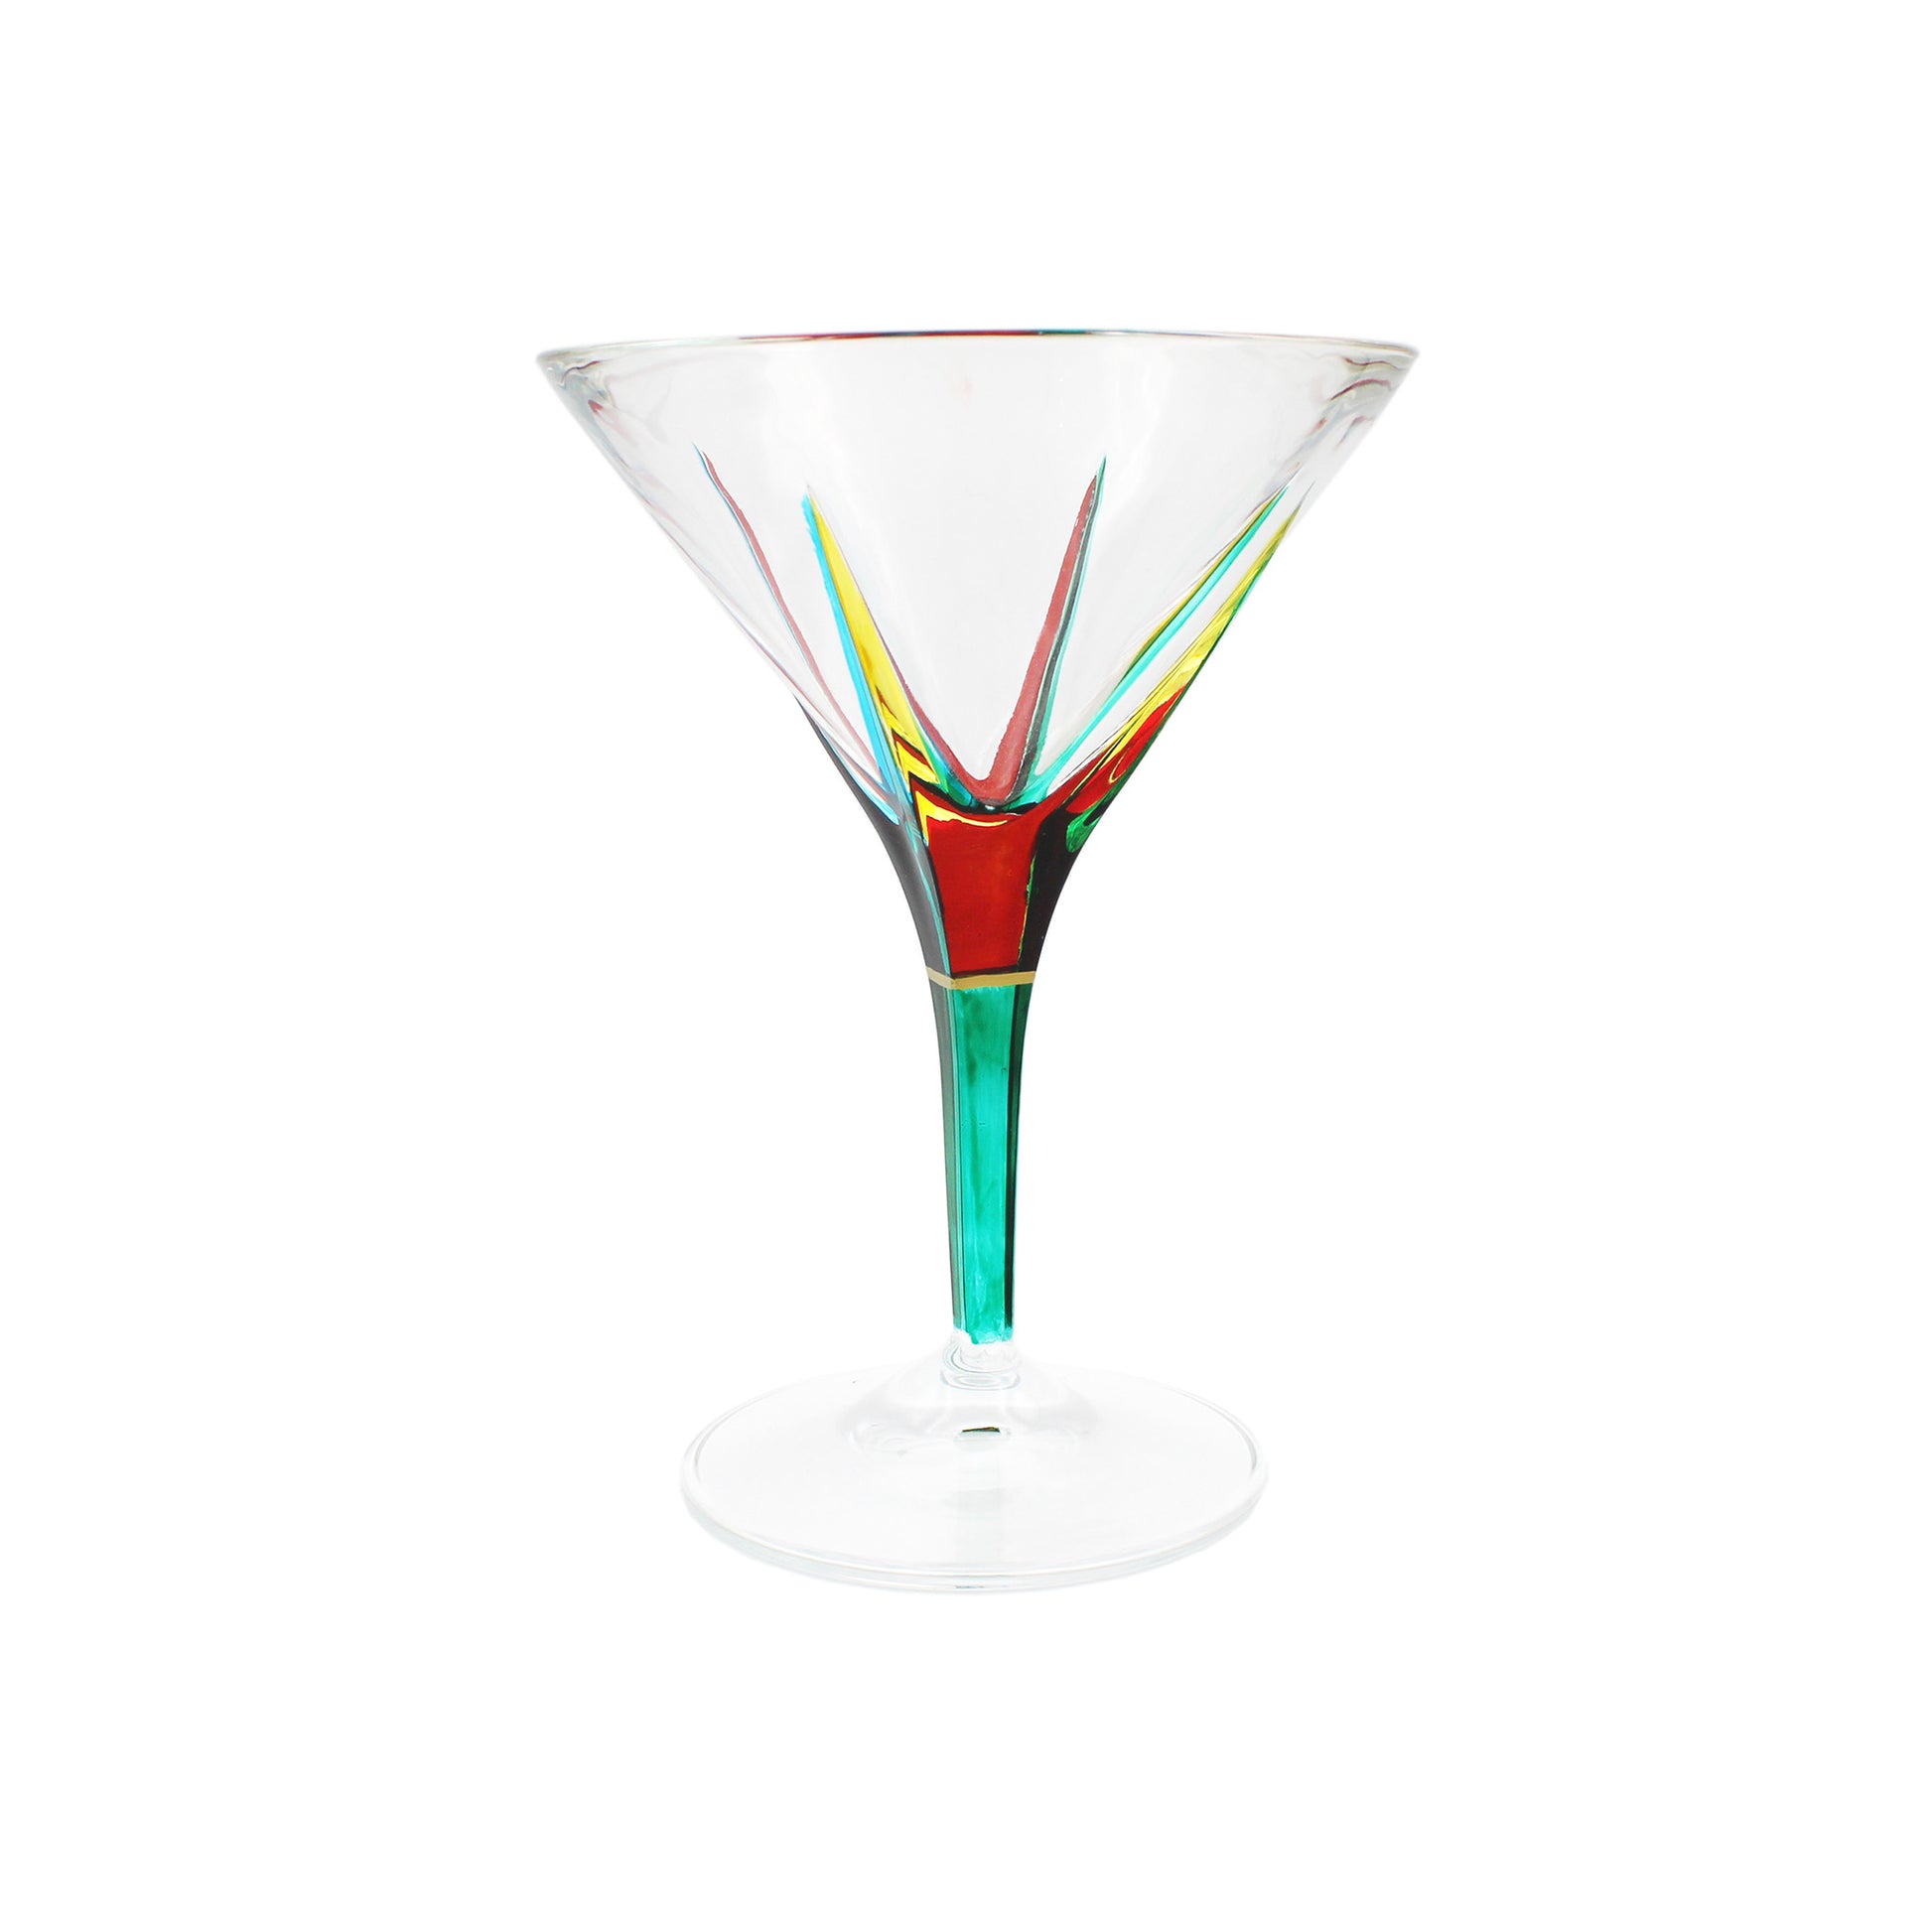 CC Zecchin Fusion Martini Glass in Green - Chrysler Museum Shop